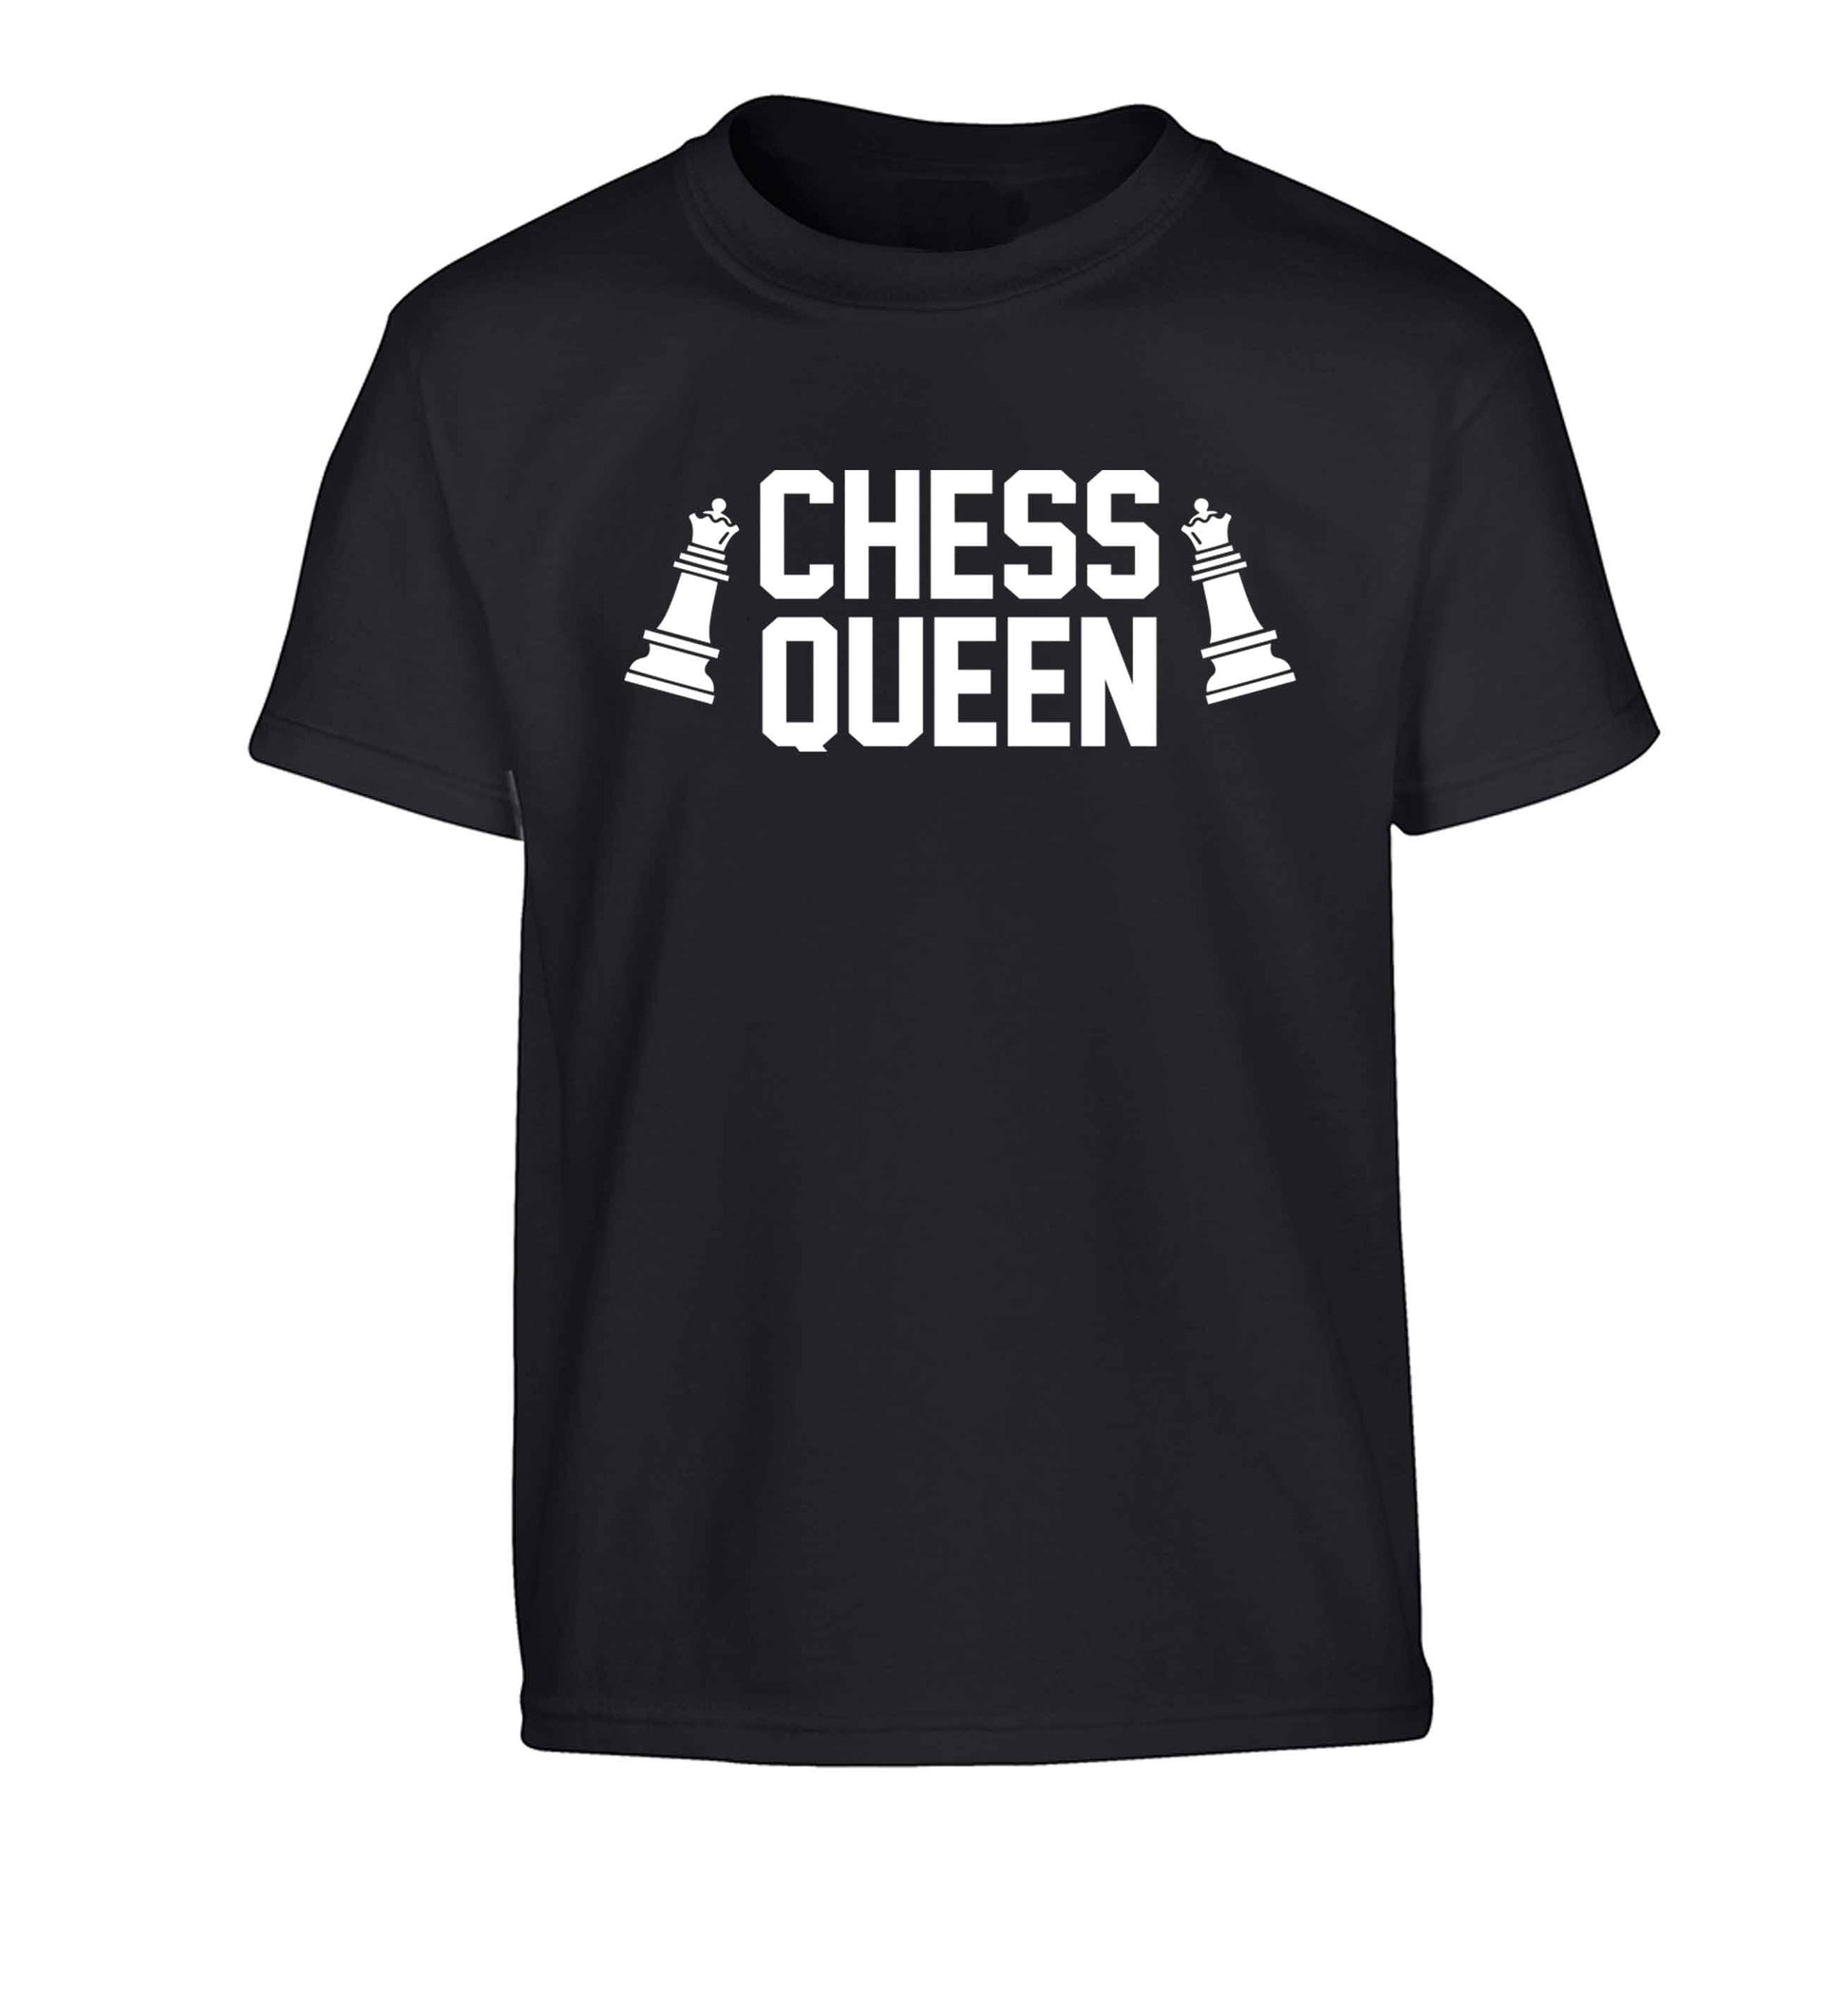 Chess queen Children's black Tshirt 12-13 Years